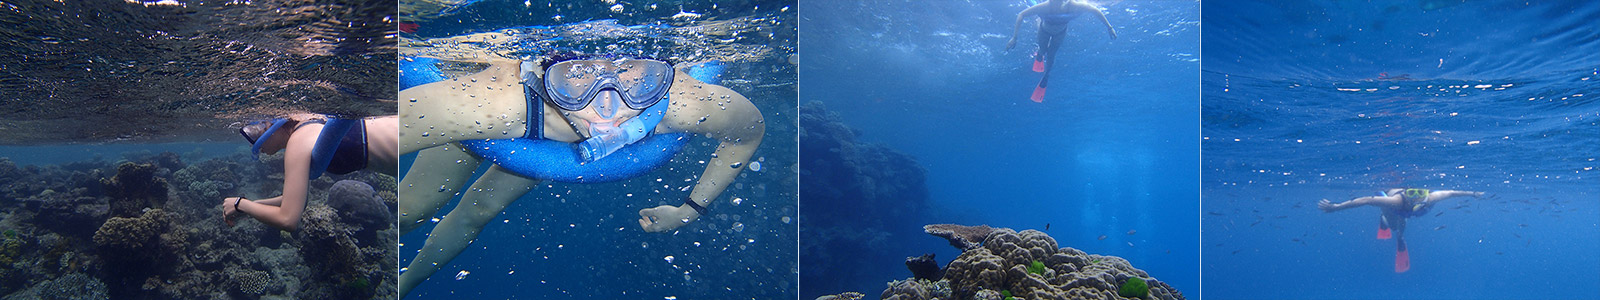 Great Barrier Reef Cairns, June 2015: Snorkelling